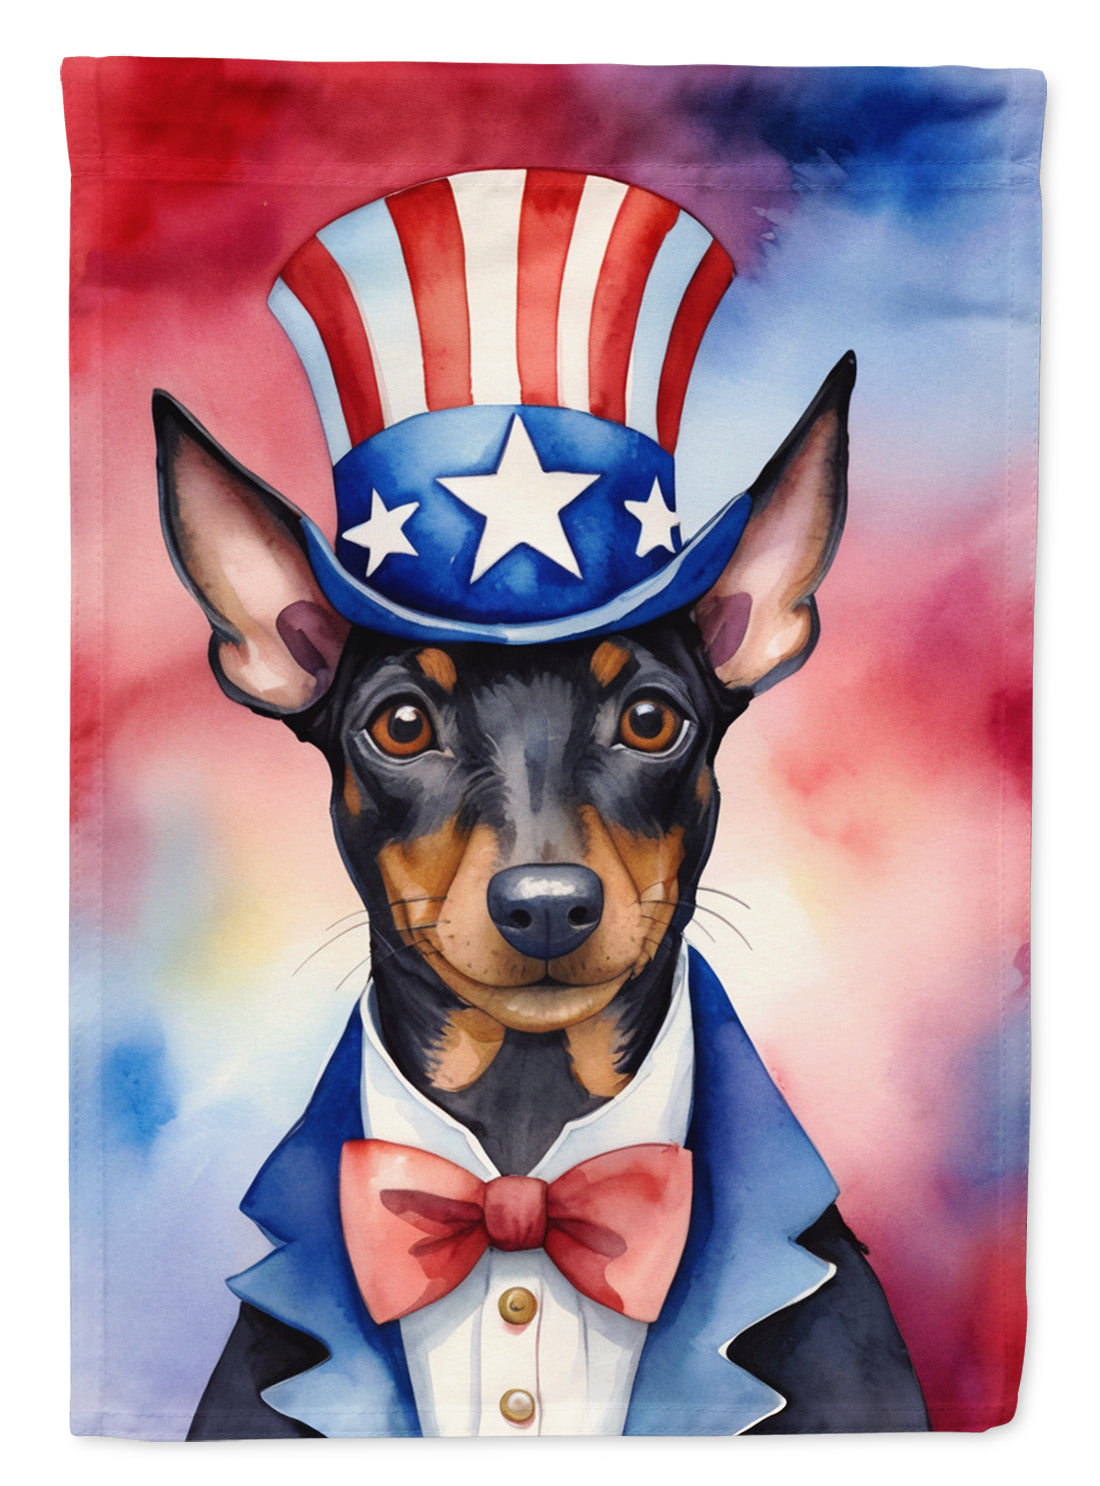 Buy this Manchester Terrier Patriotic American Garden Flag